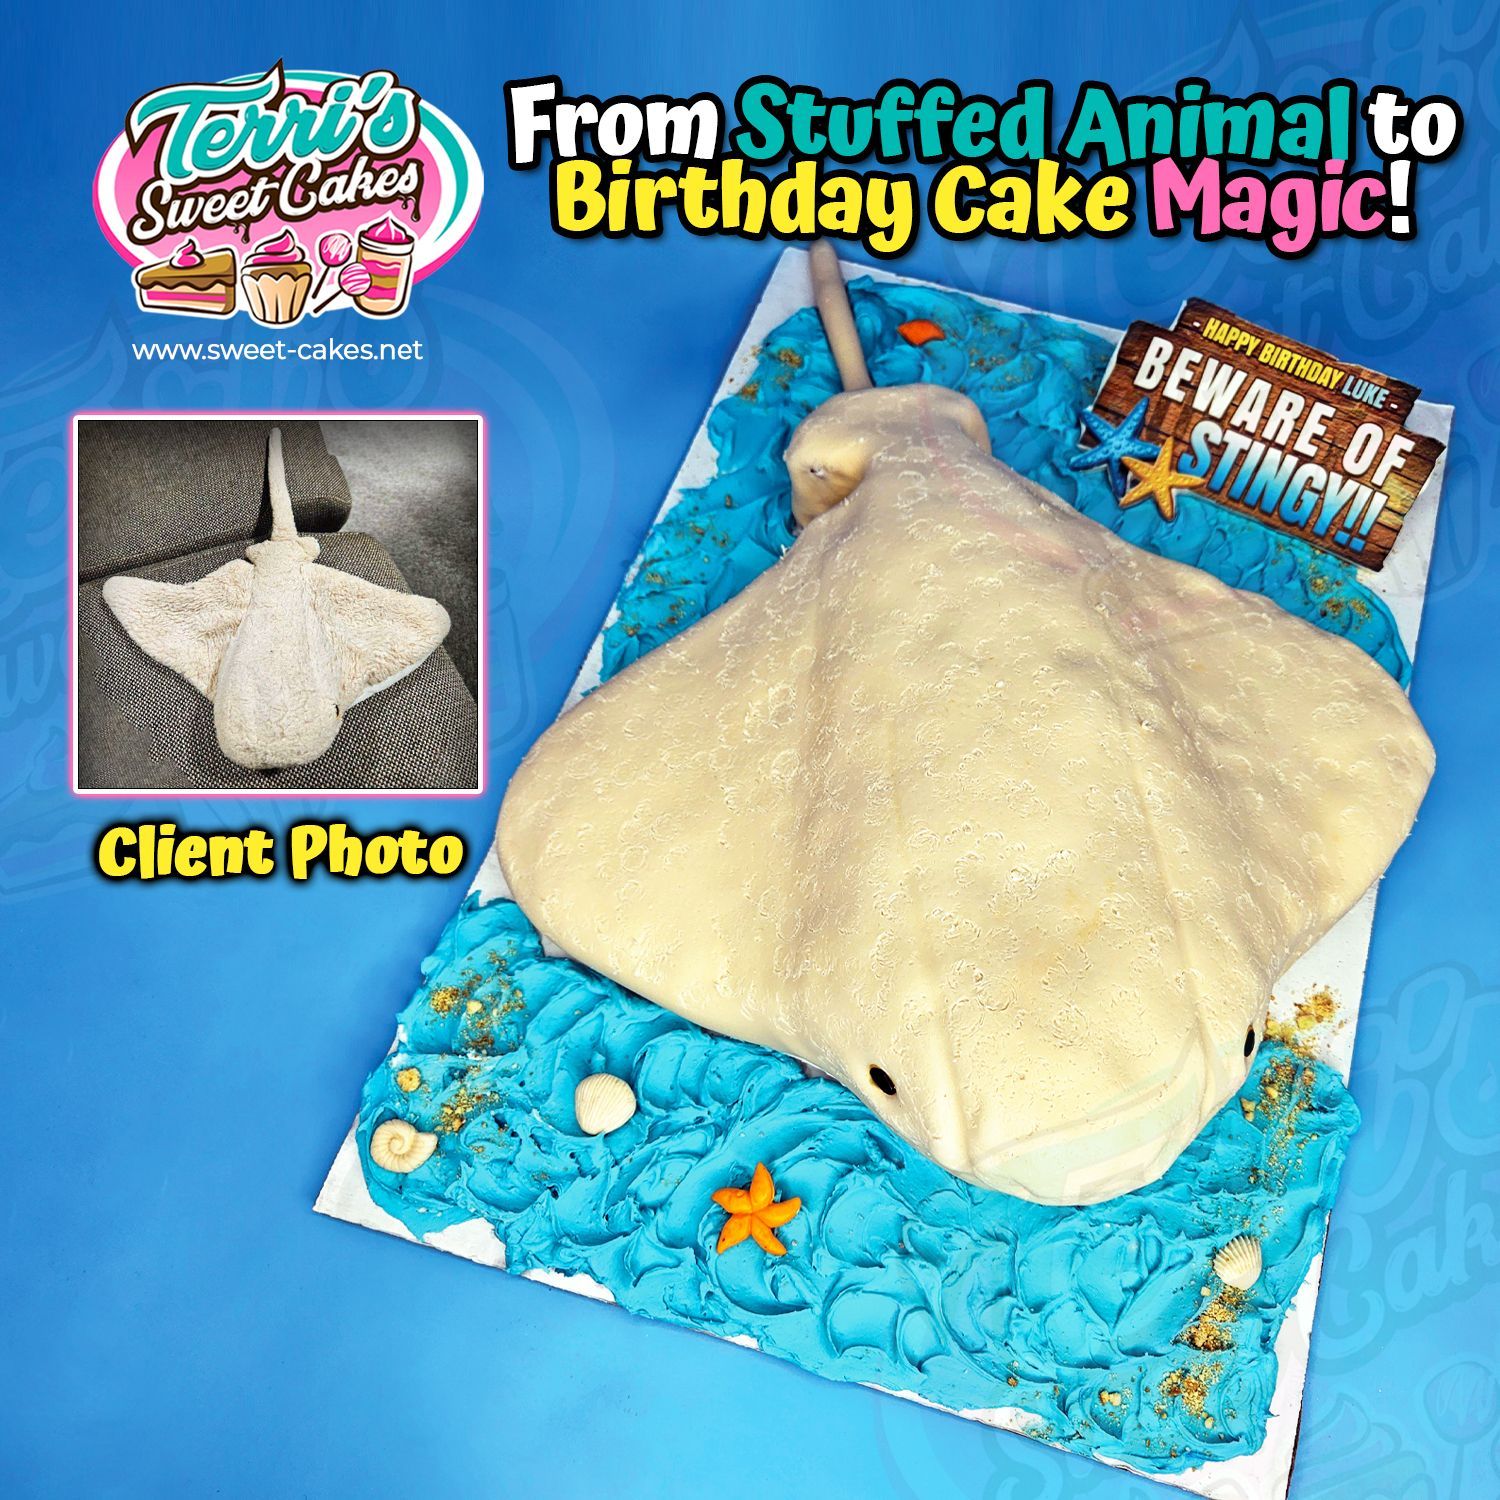 Stingray Inspired Birthday Cake by Terri's Sweet Cakes